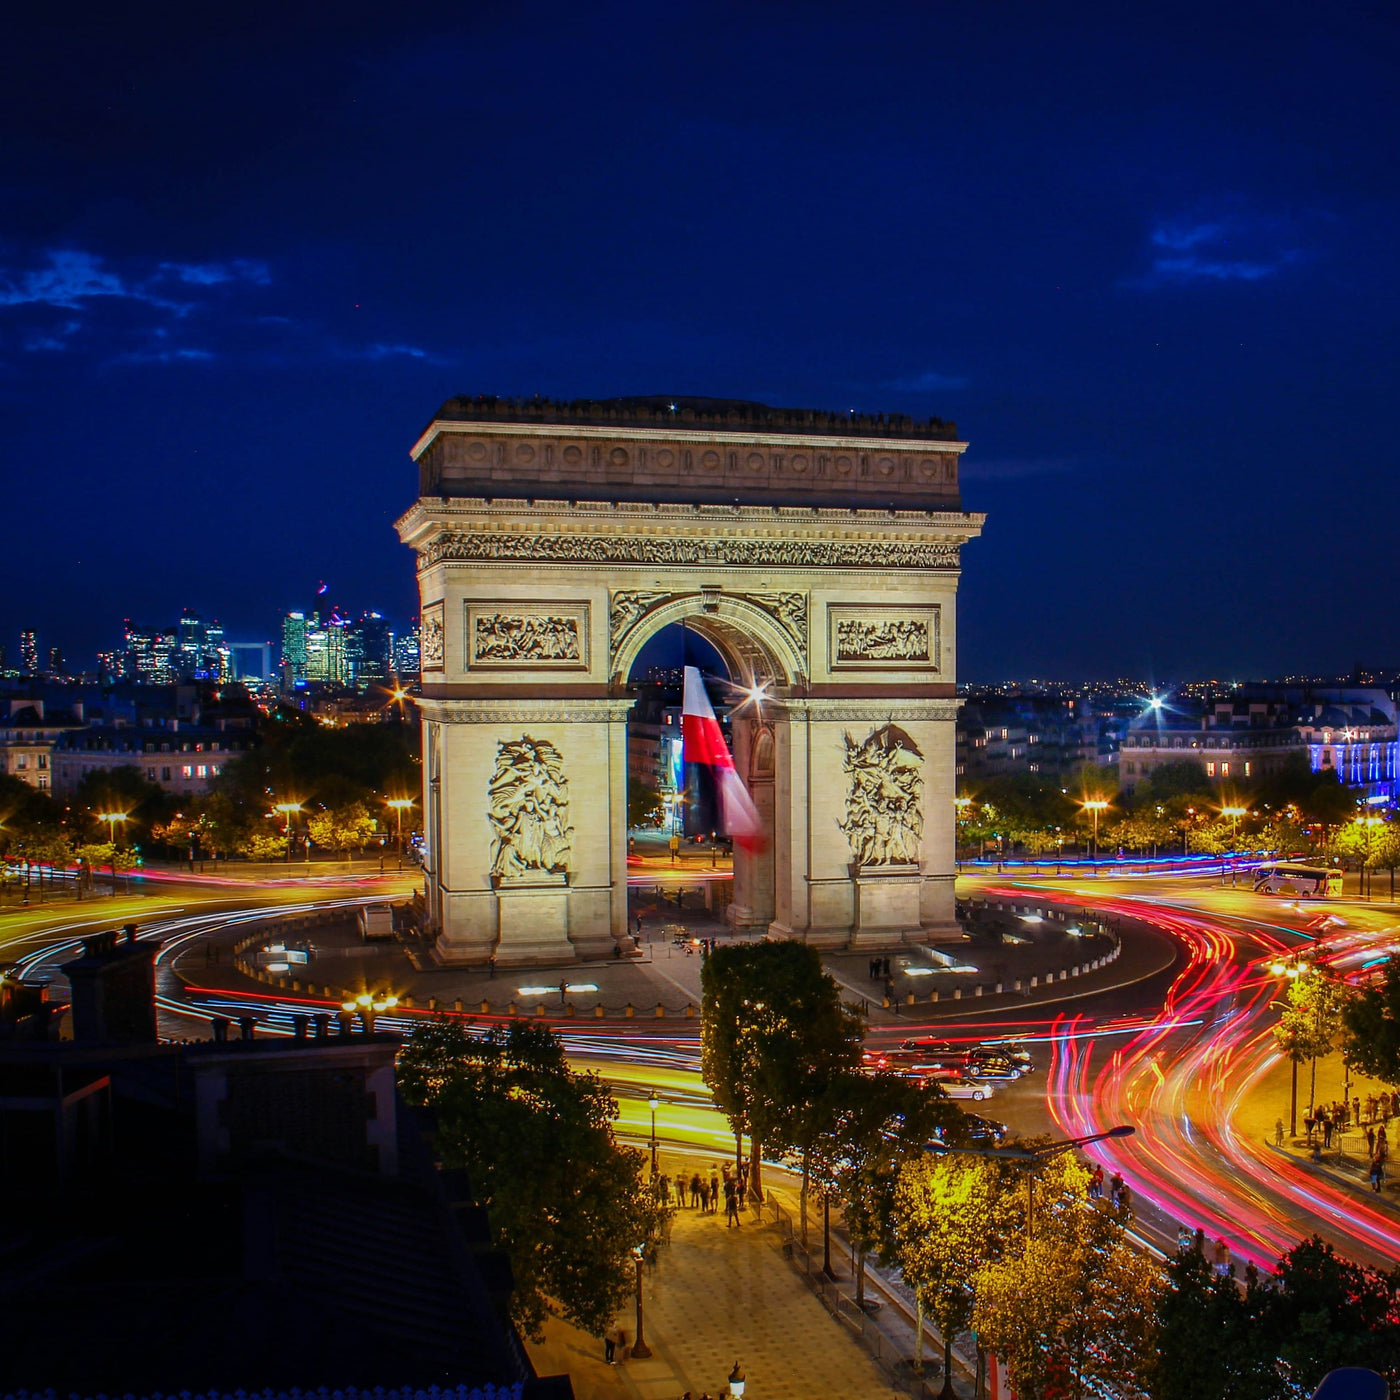 Depancel Paris showroom Champs Elysees France international french watch brand